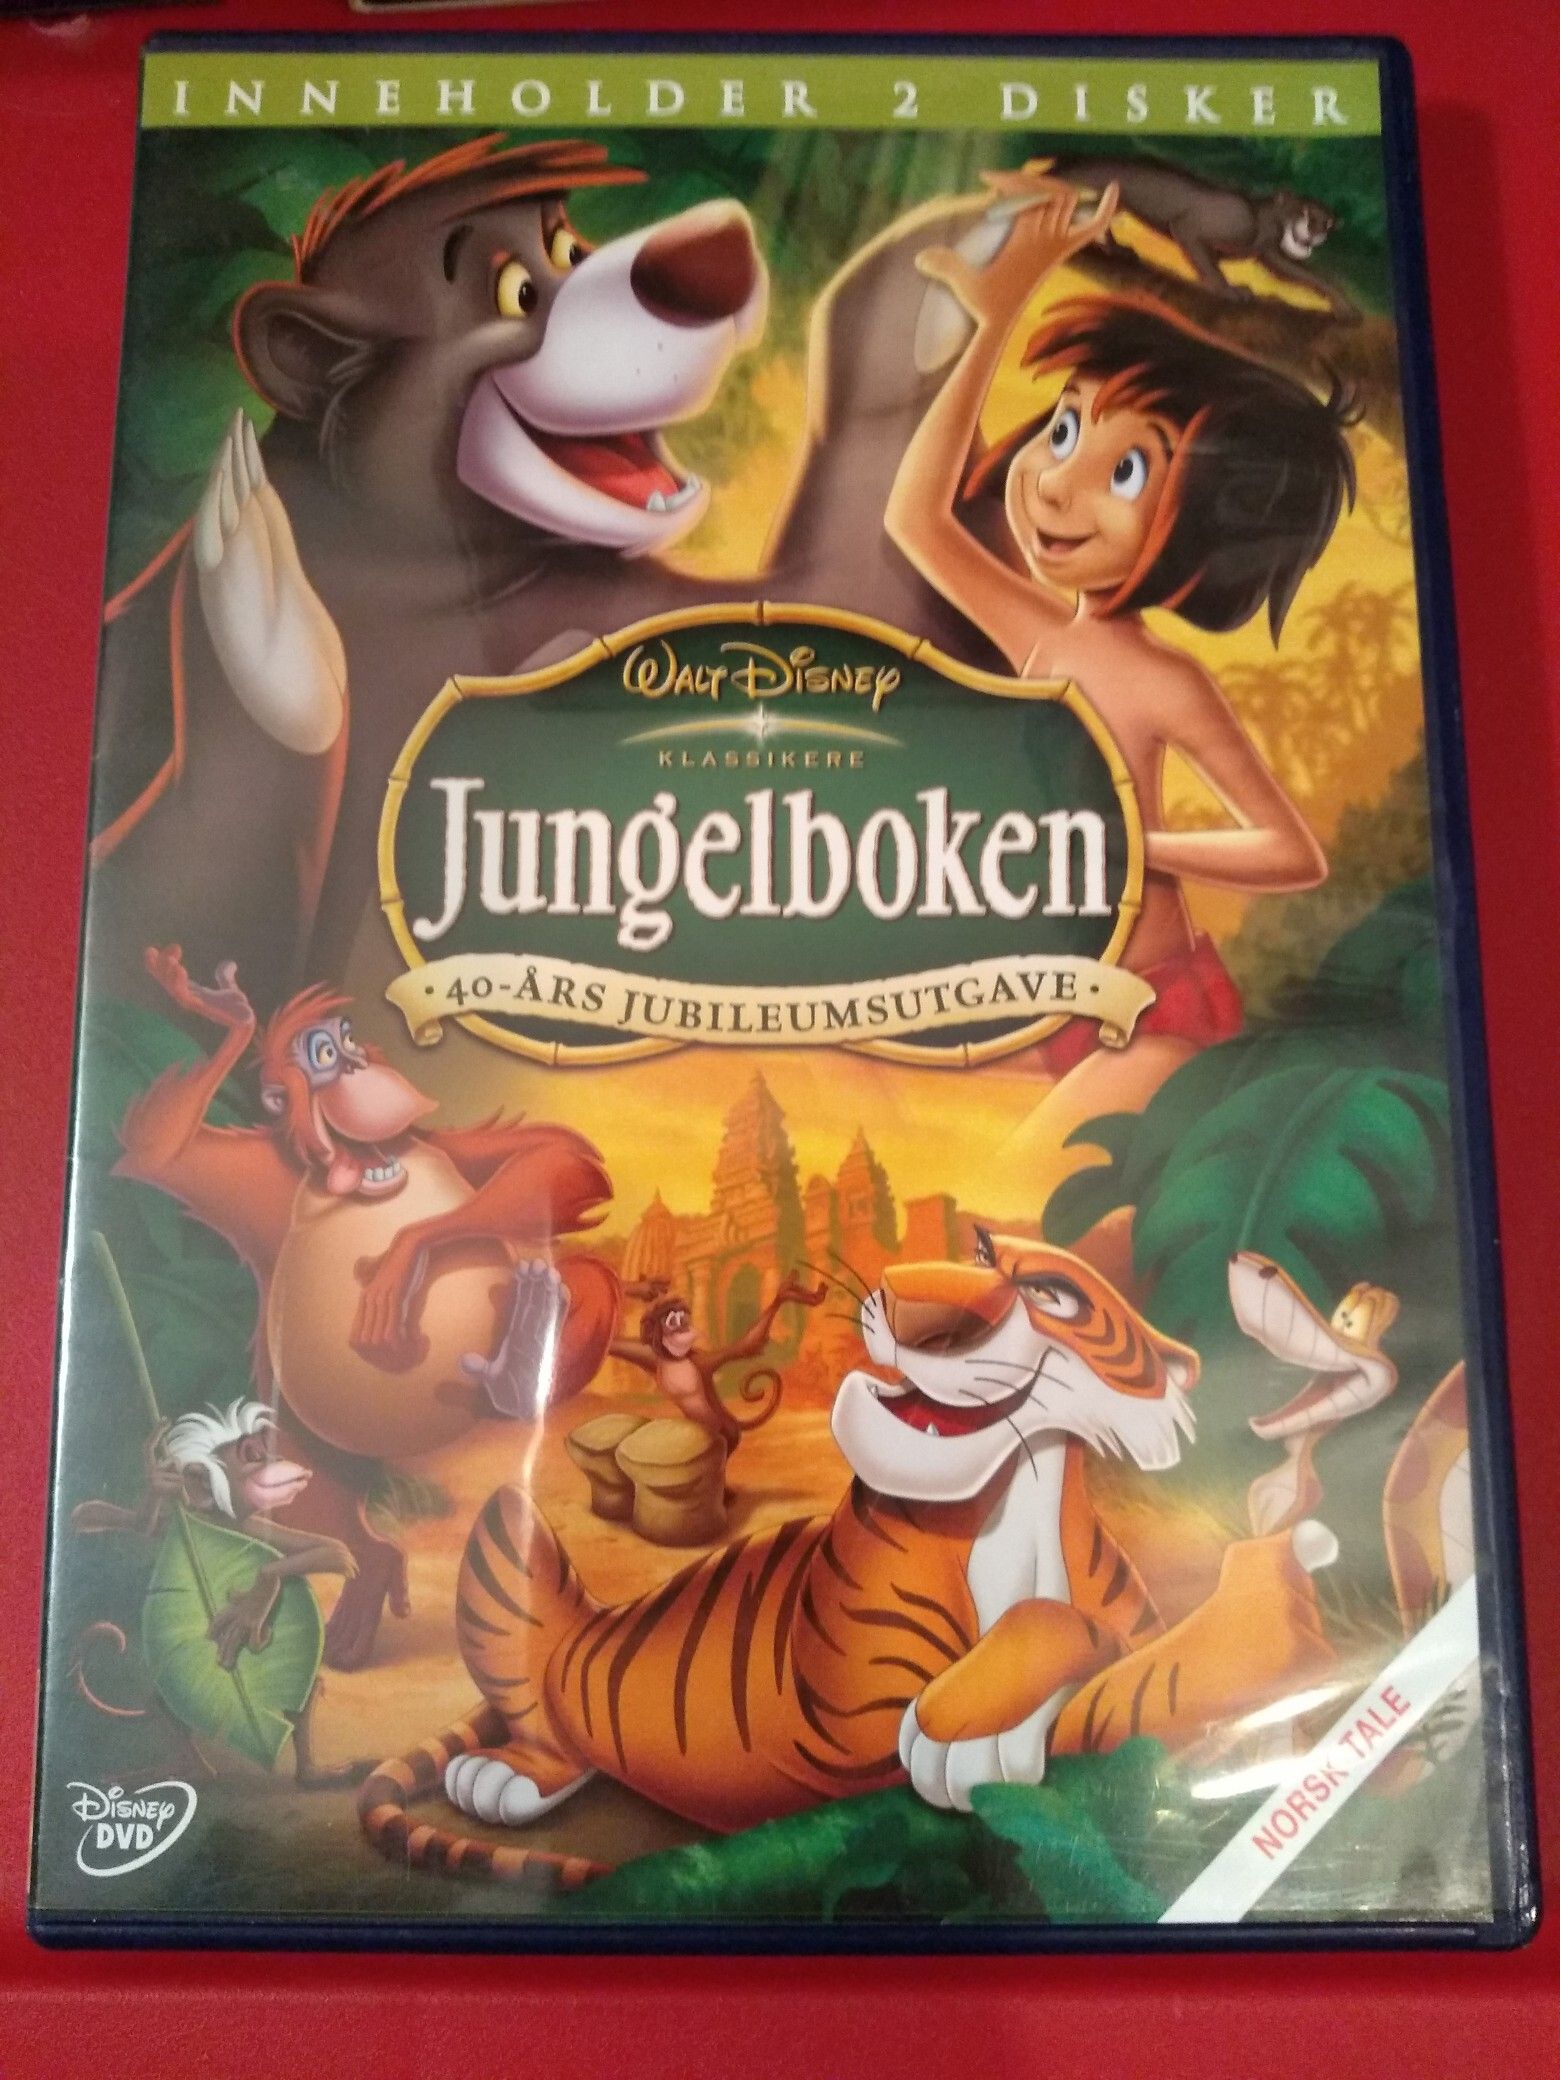 Disney's Jungleboken 40th anniversary (DVD) in Spanish!